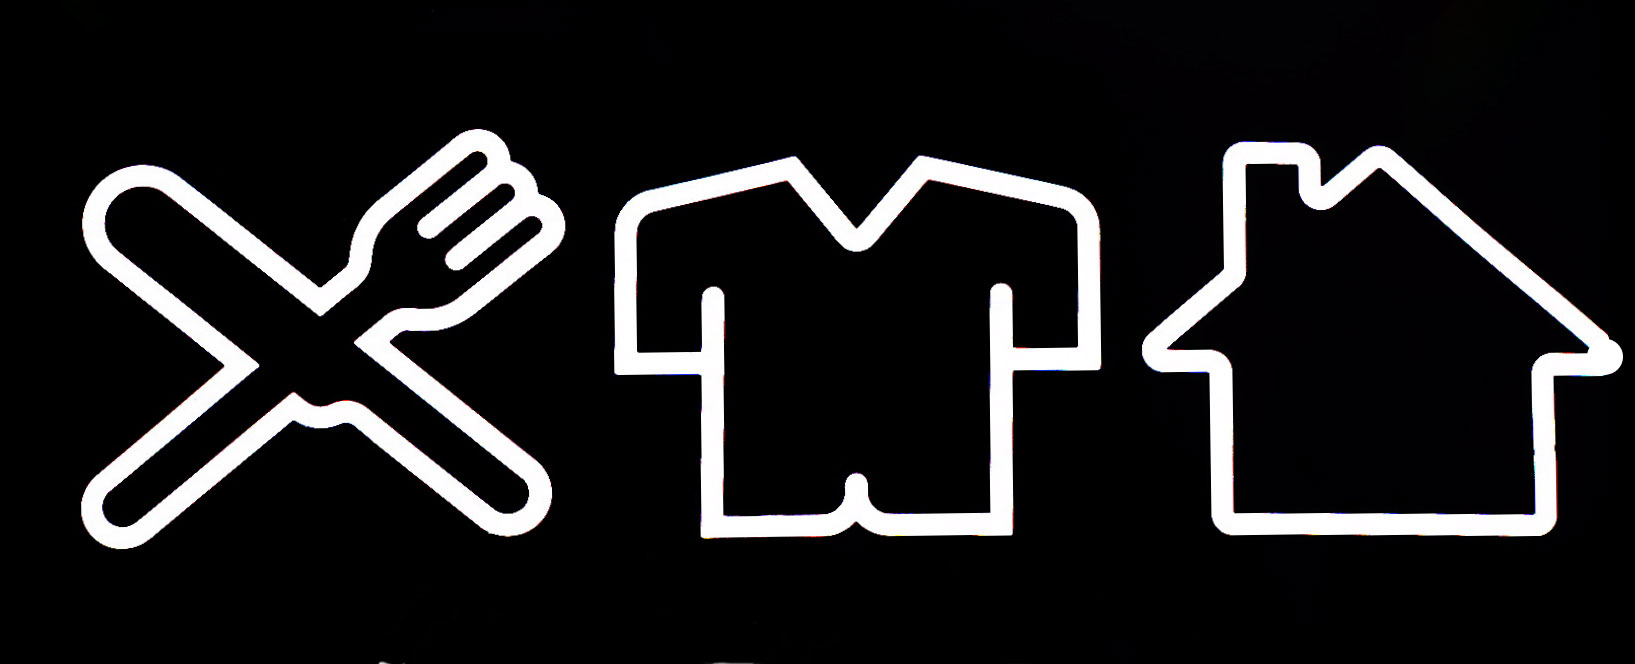 Pictogram of 3 symbols: knife and fork, shirt, 
        house, lightning, and car